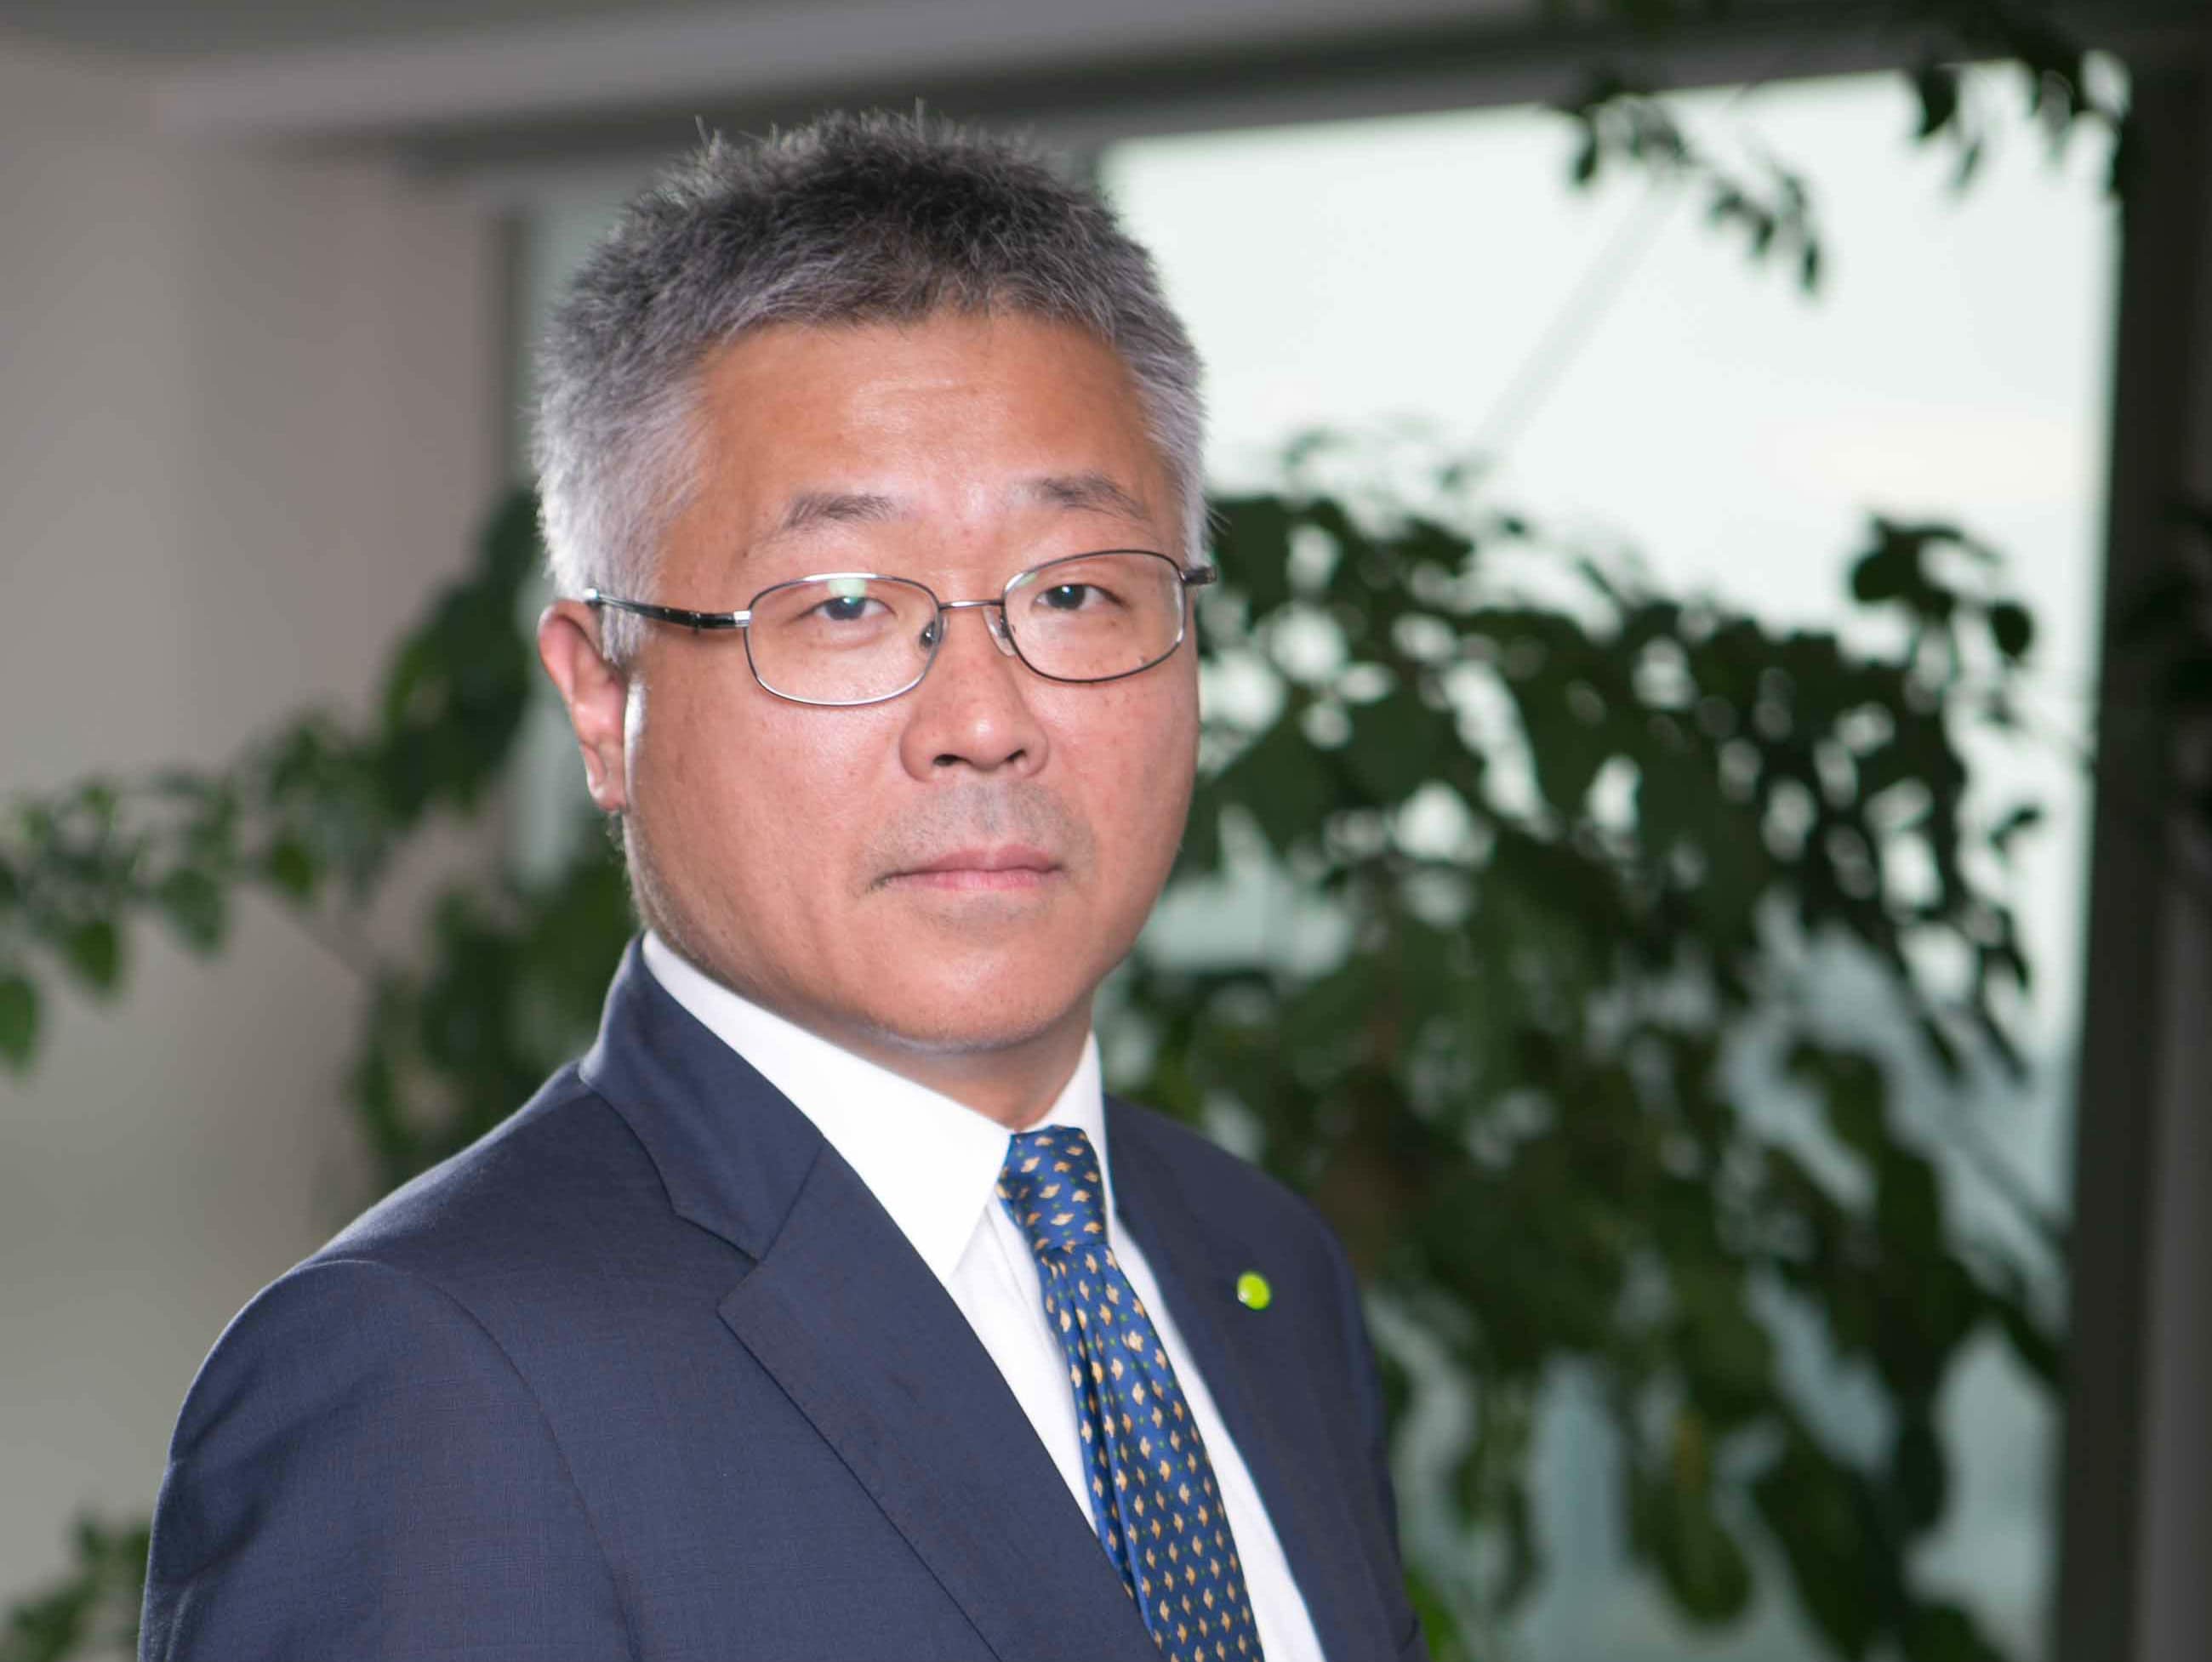 Sitao Xu, Chief Economist & Partner, Deloitte China